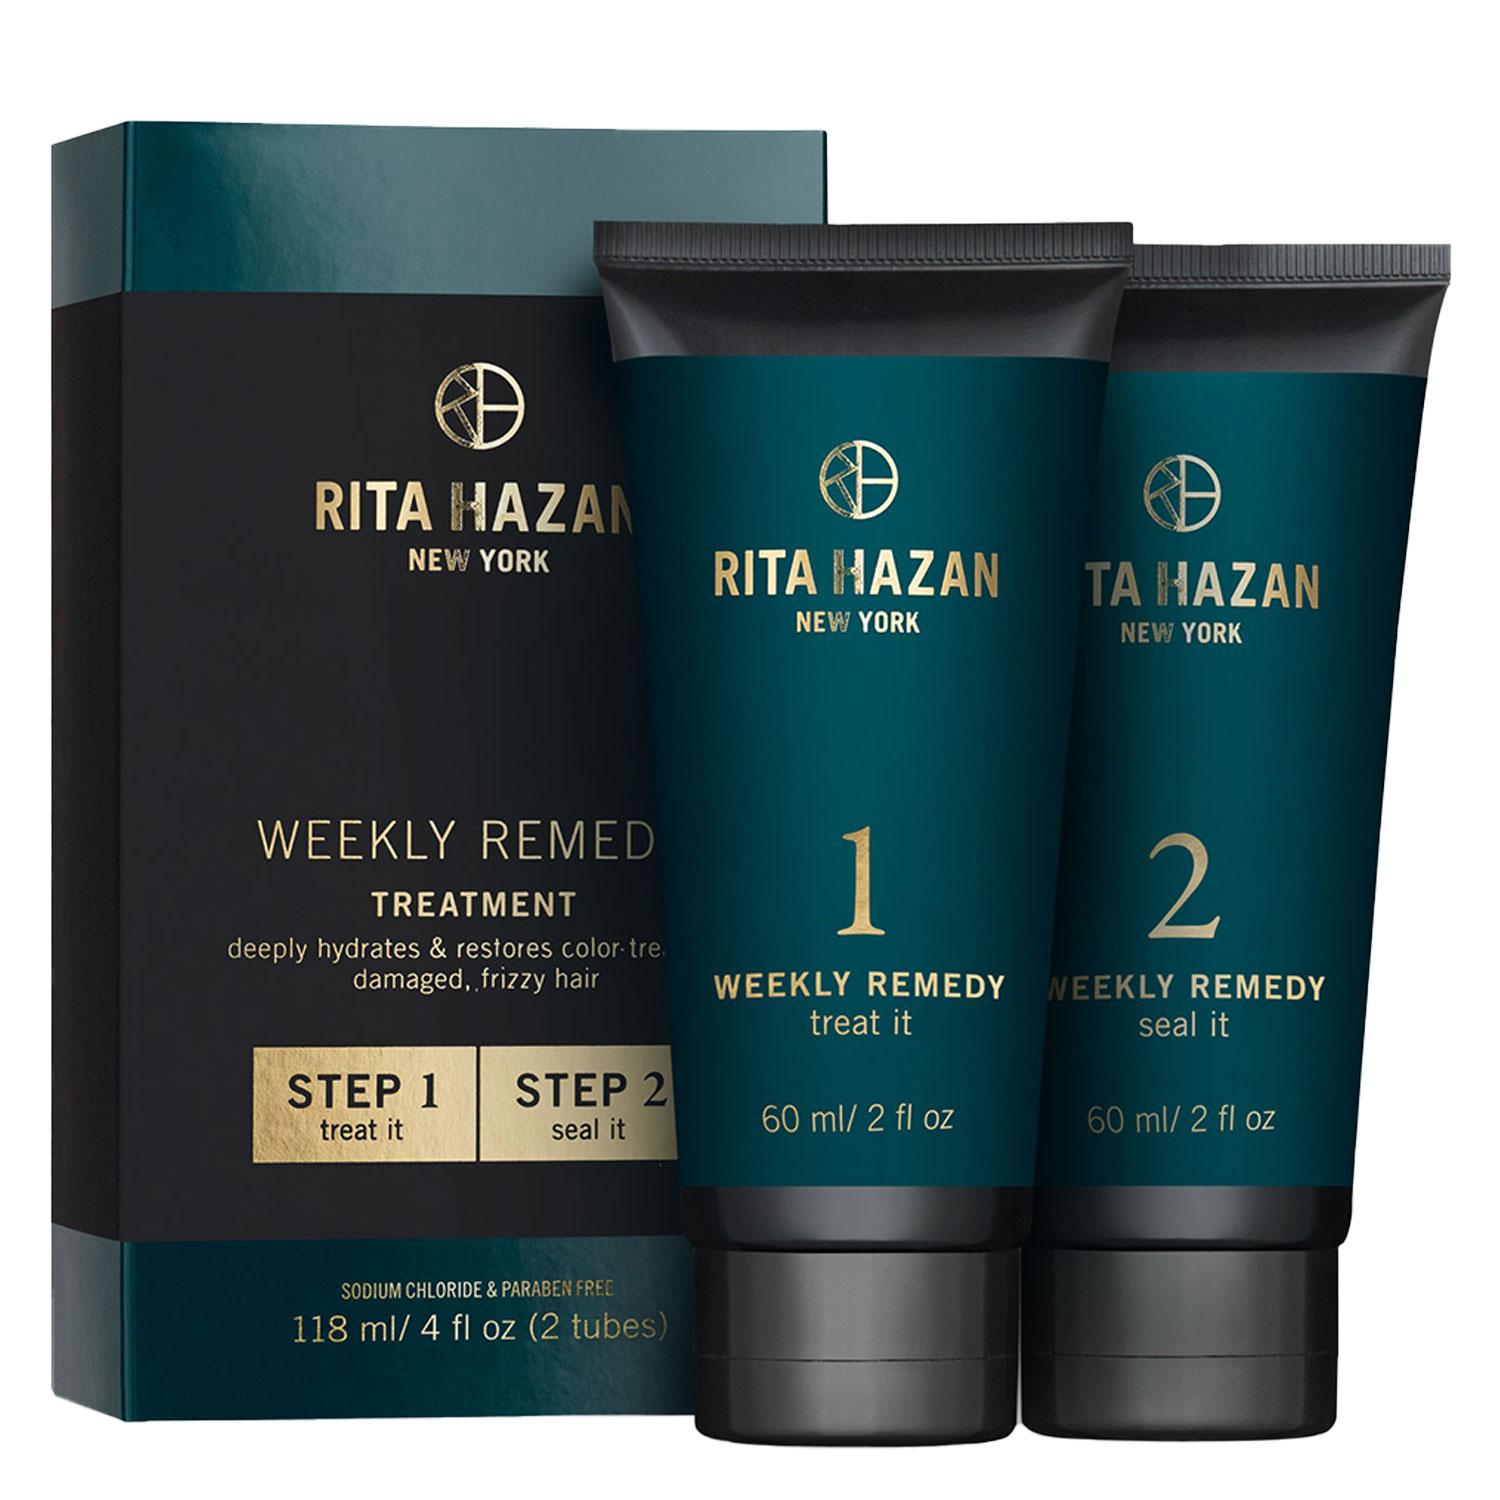 Rita Hazan New York - Weekly Remedy Treatment